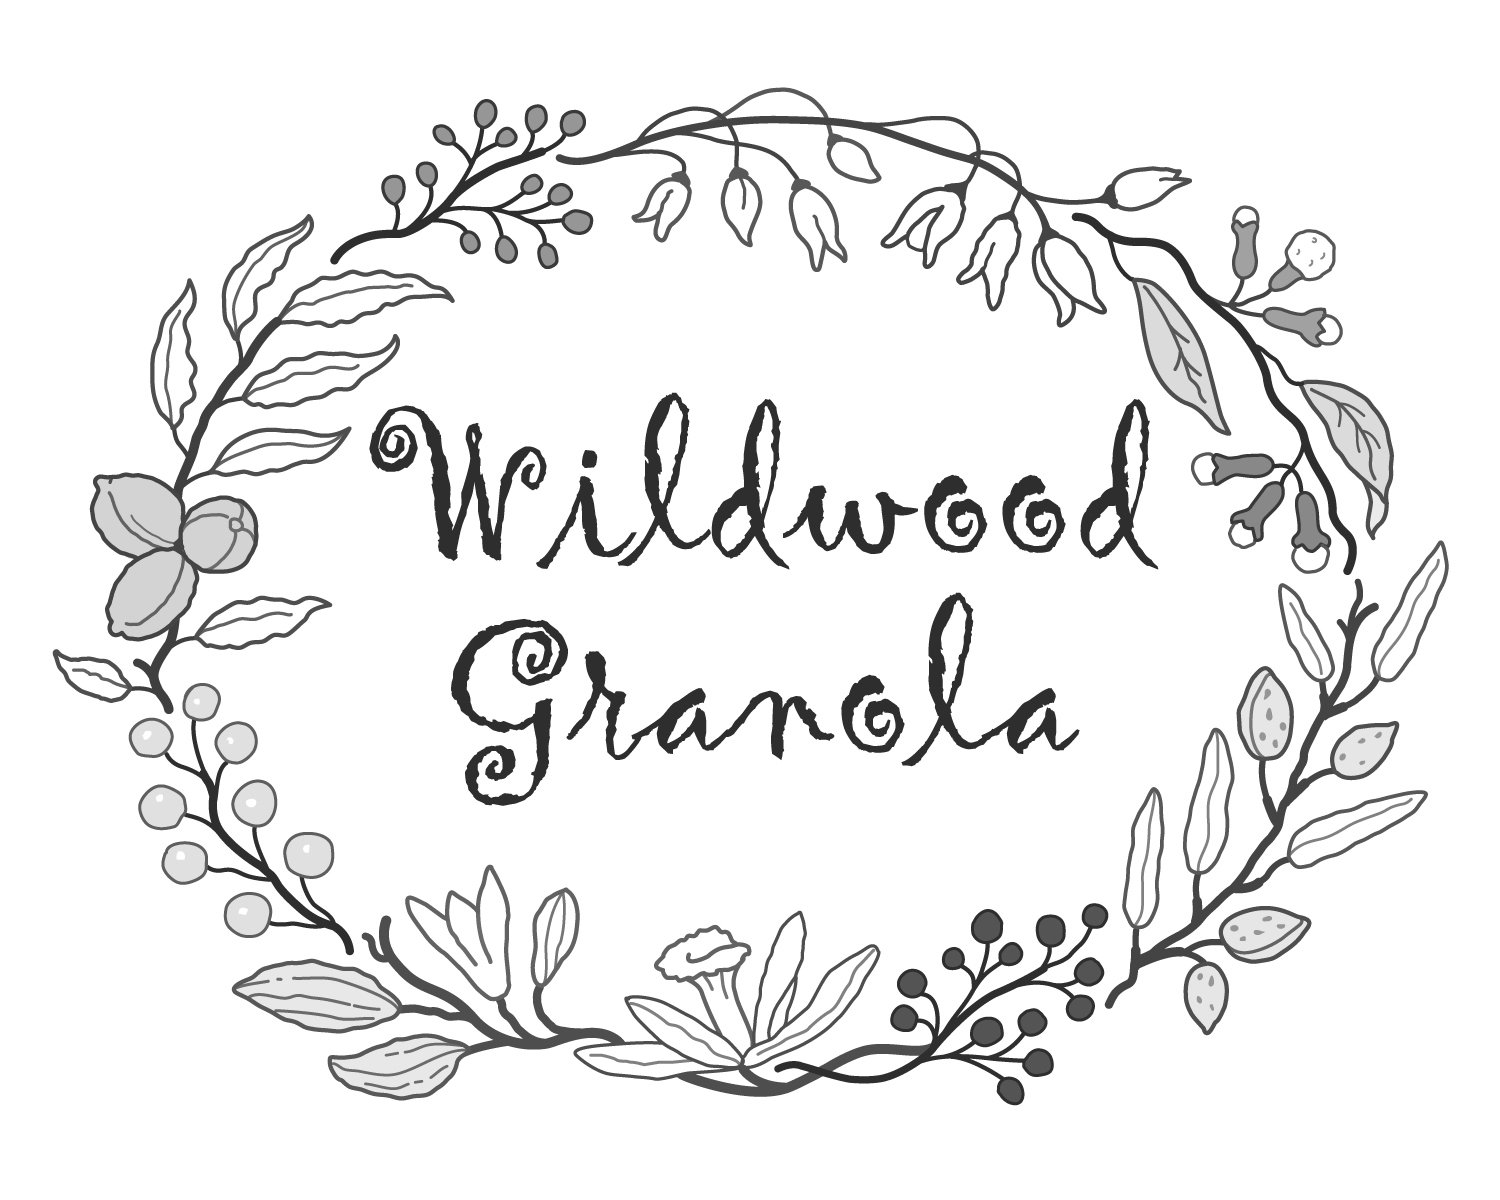 Wildwood Granola.jpeg